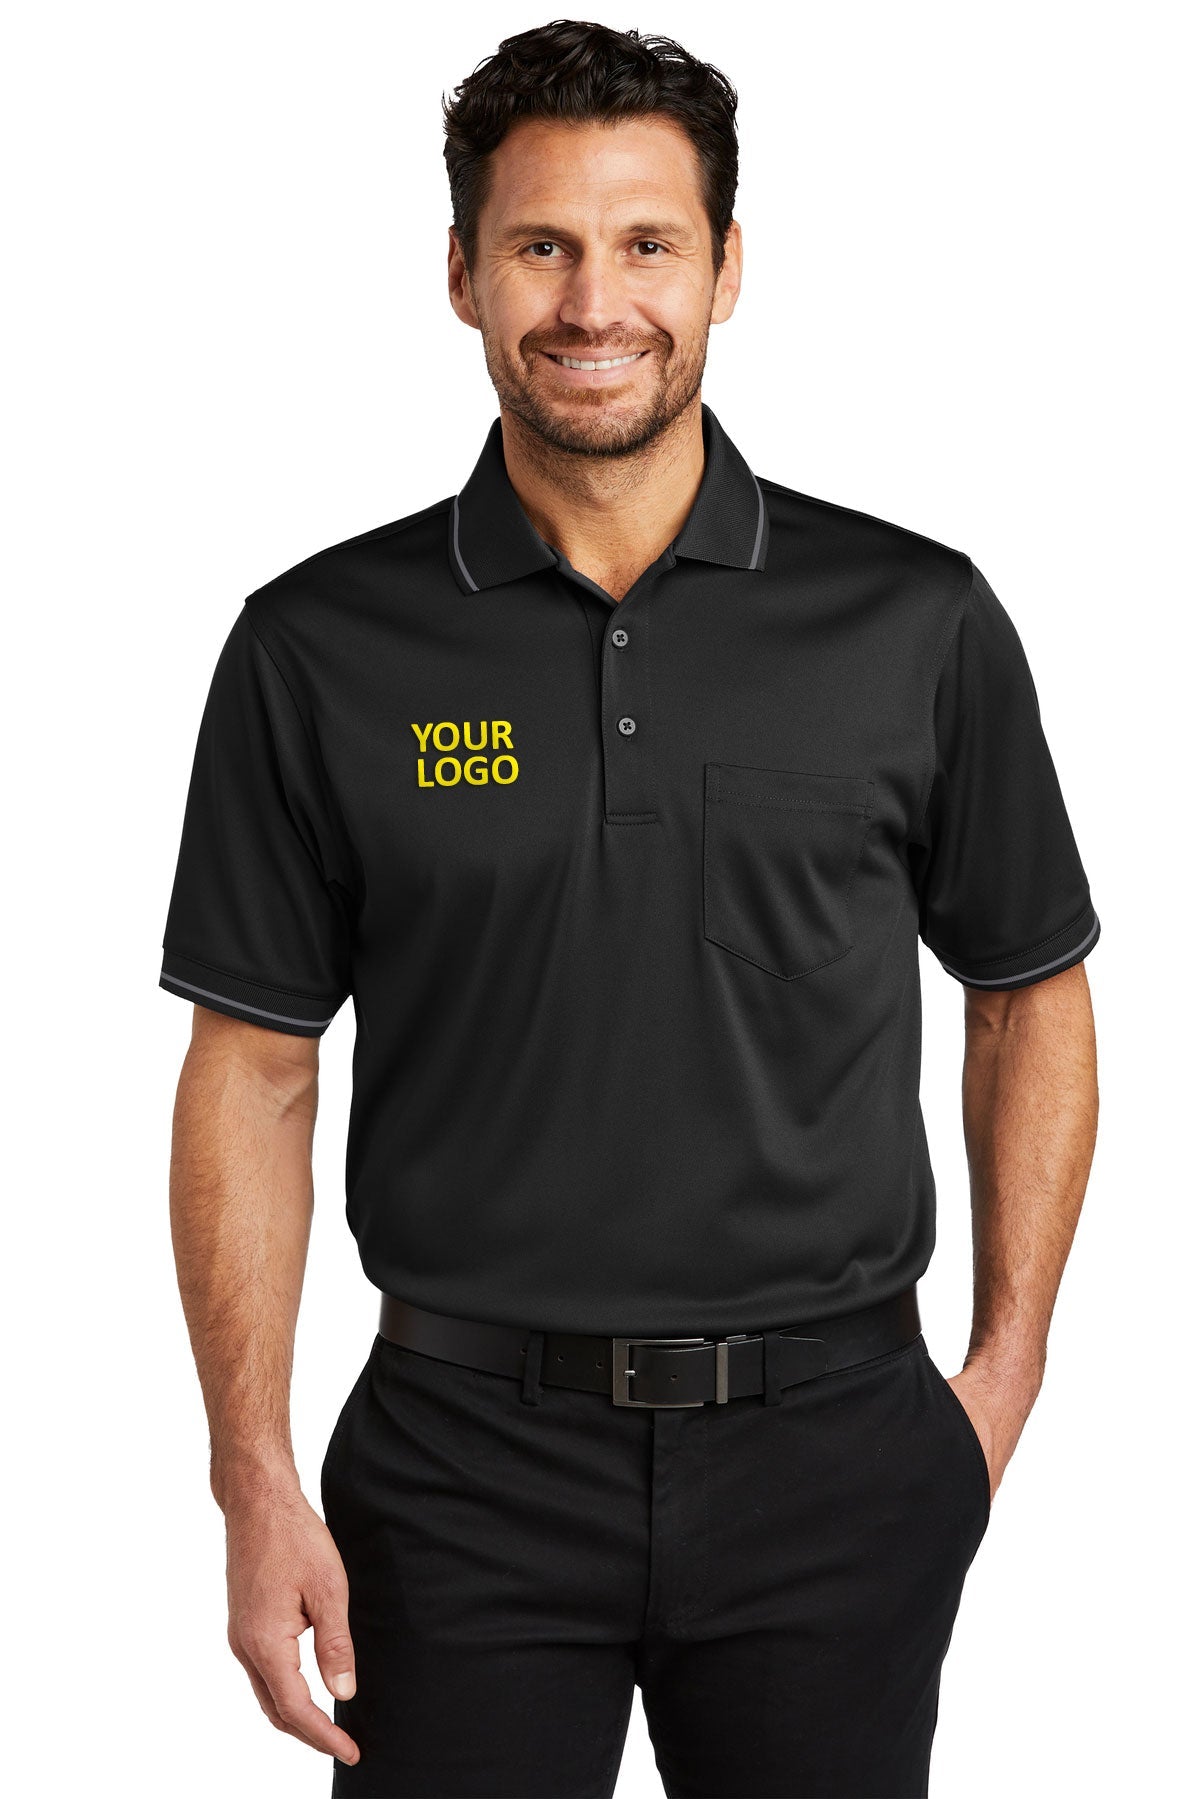 CornerStone Black/ Smoke Grey CS415 polo shirts with custom logos